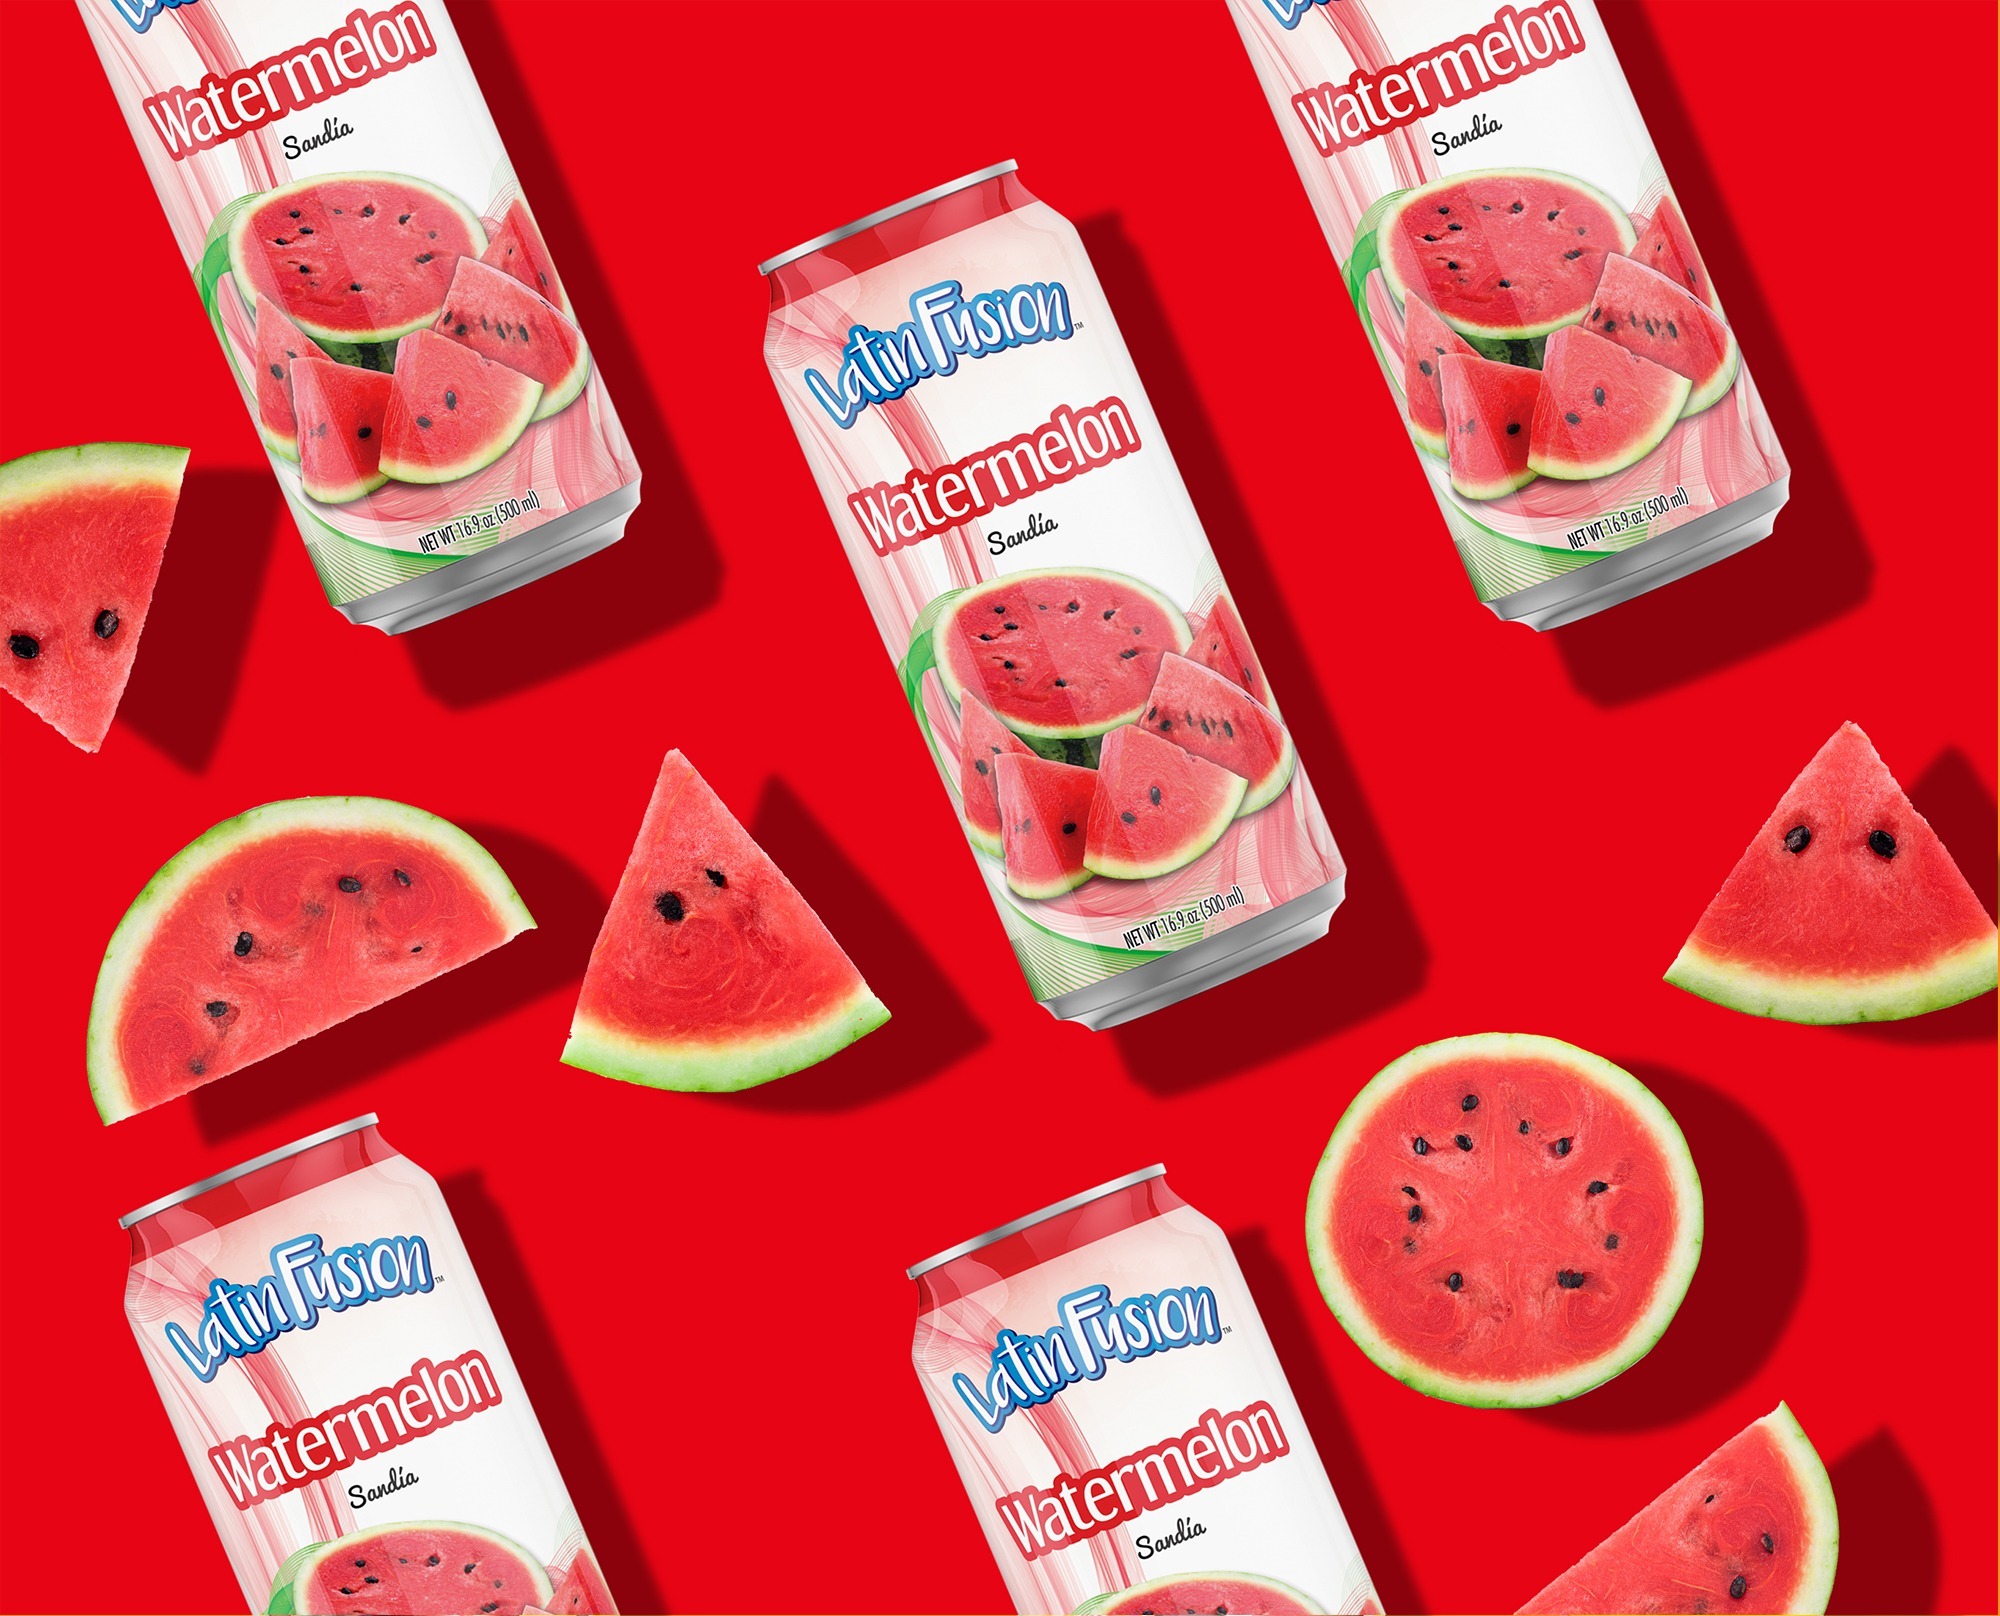 Latin Fusion Fruit Drinks Watermelon Package Design Octane Advertising Design